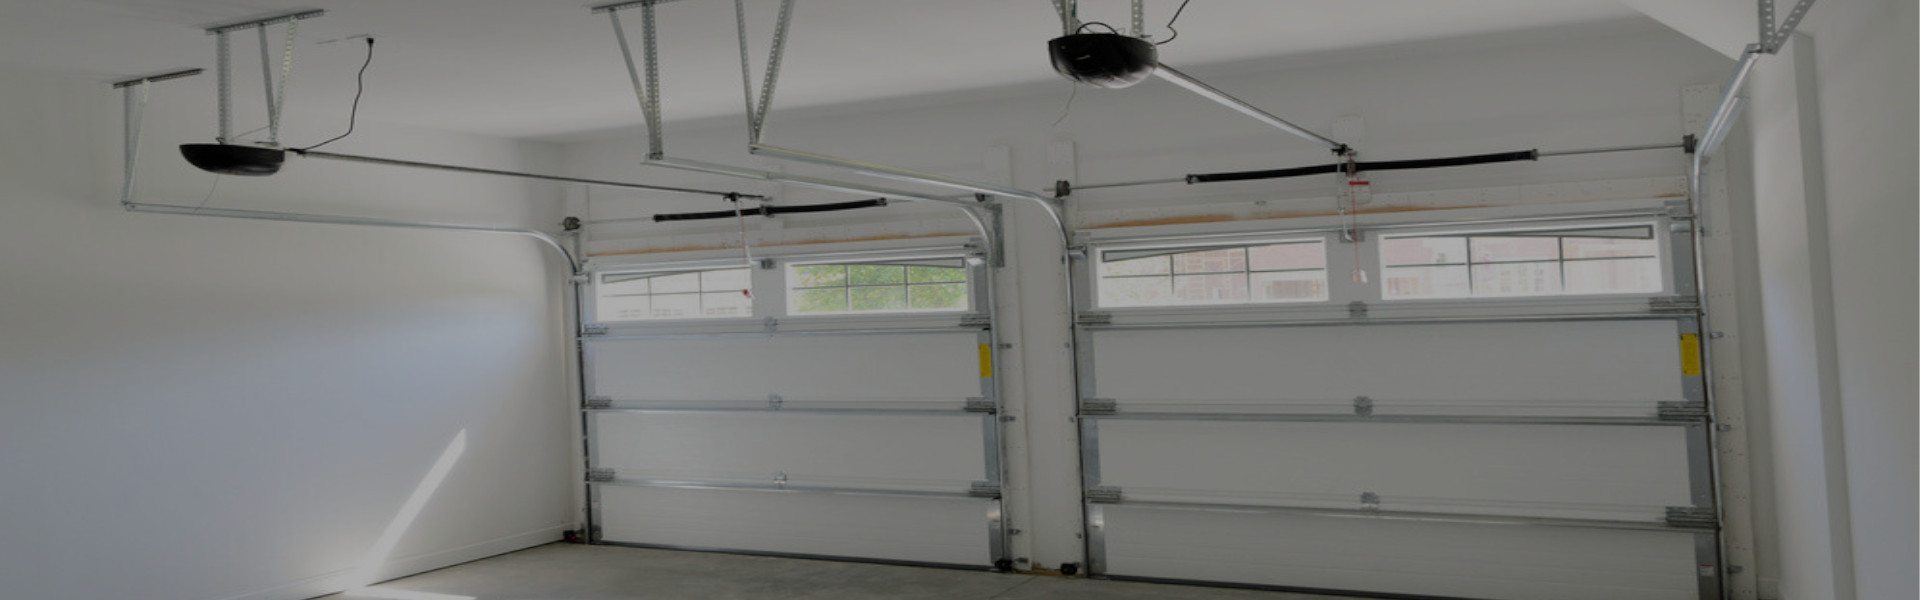 Slider Garage Door Repair, Glaziers in Totteridge, Whetstone, N20